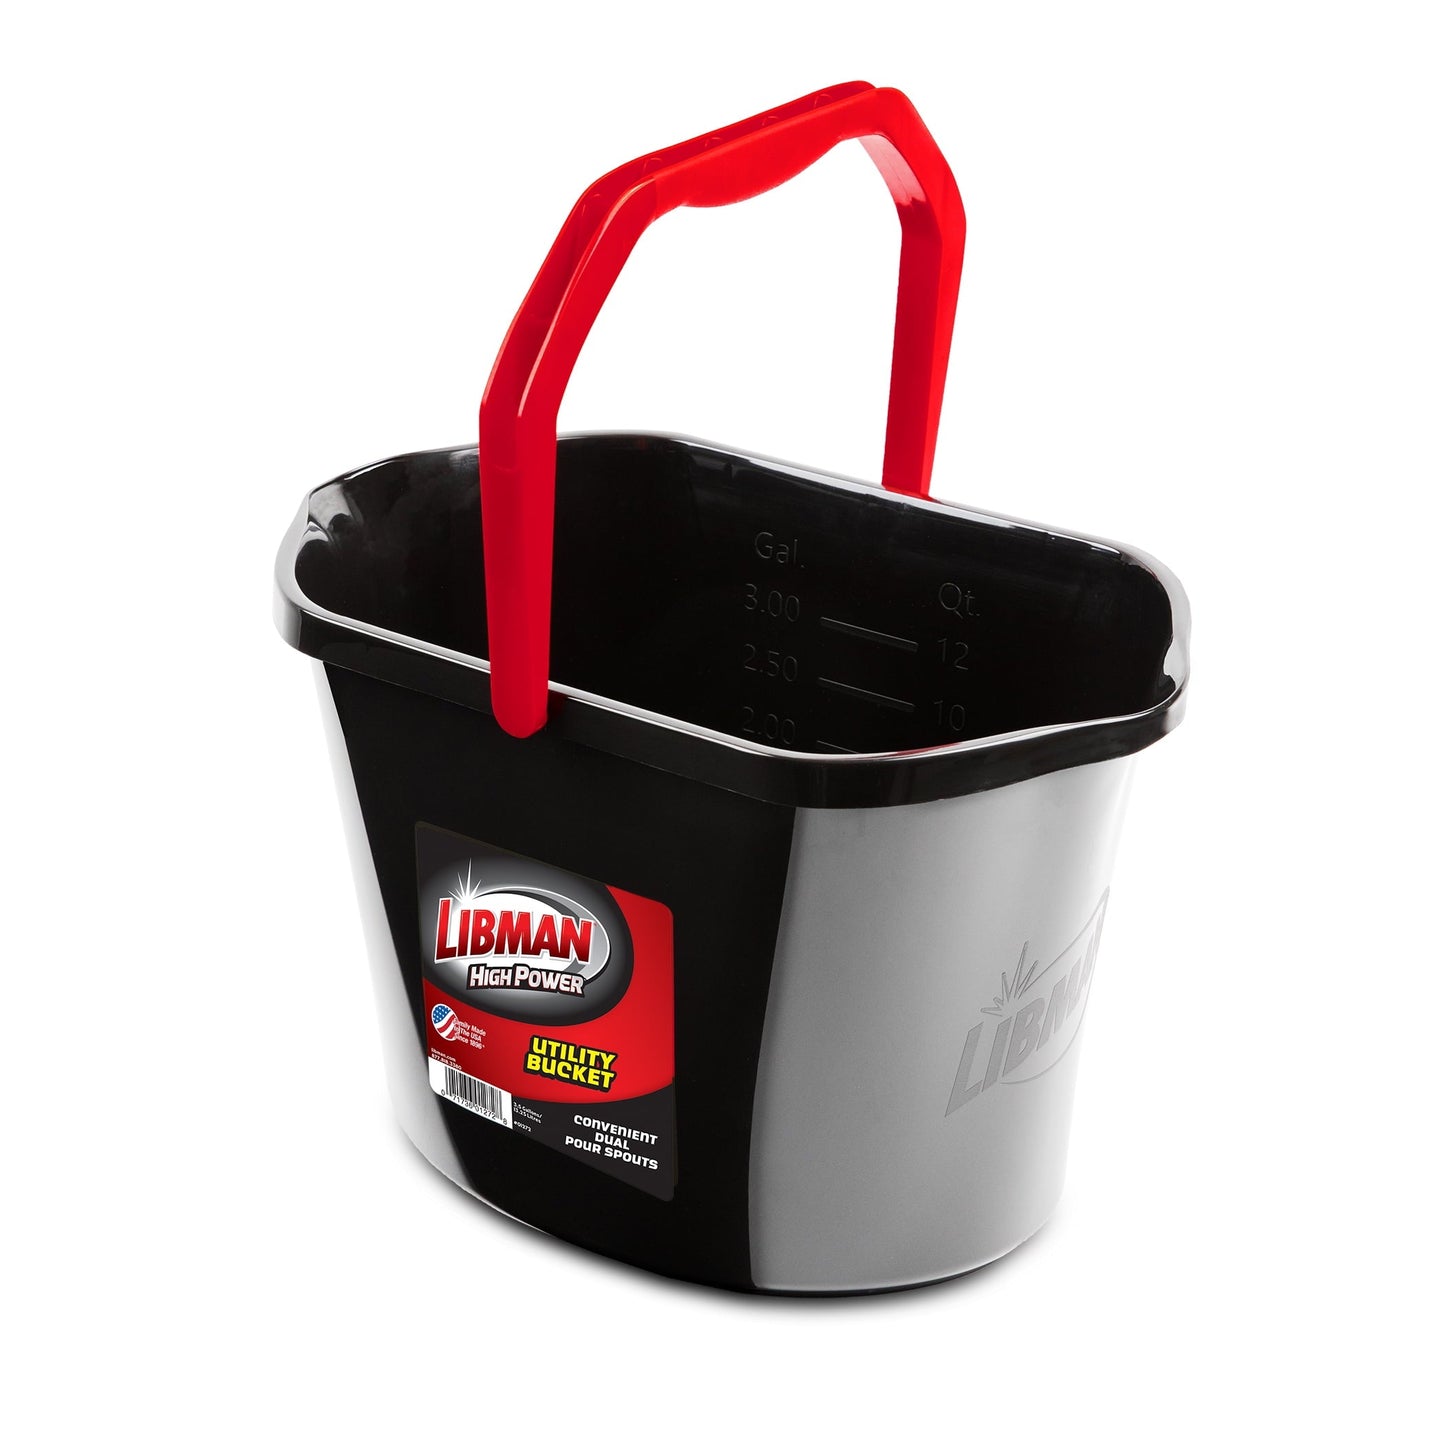 Libman 3.5 Gallon Oval Utility Bucket